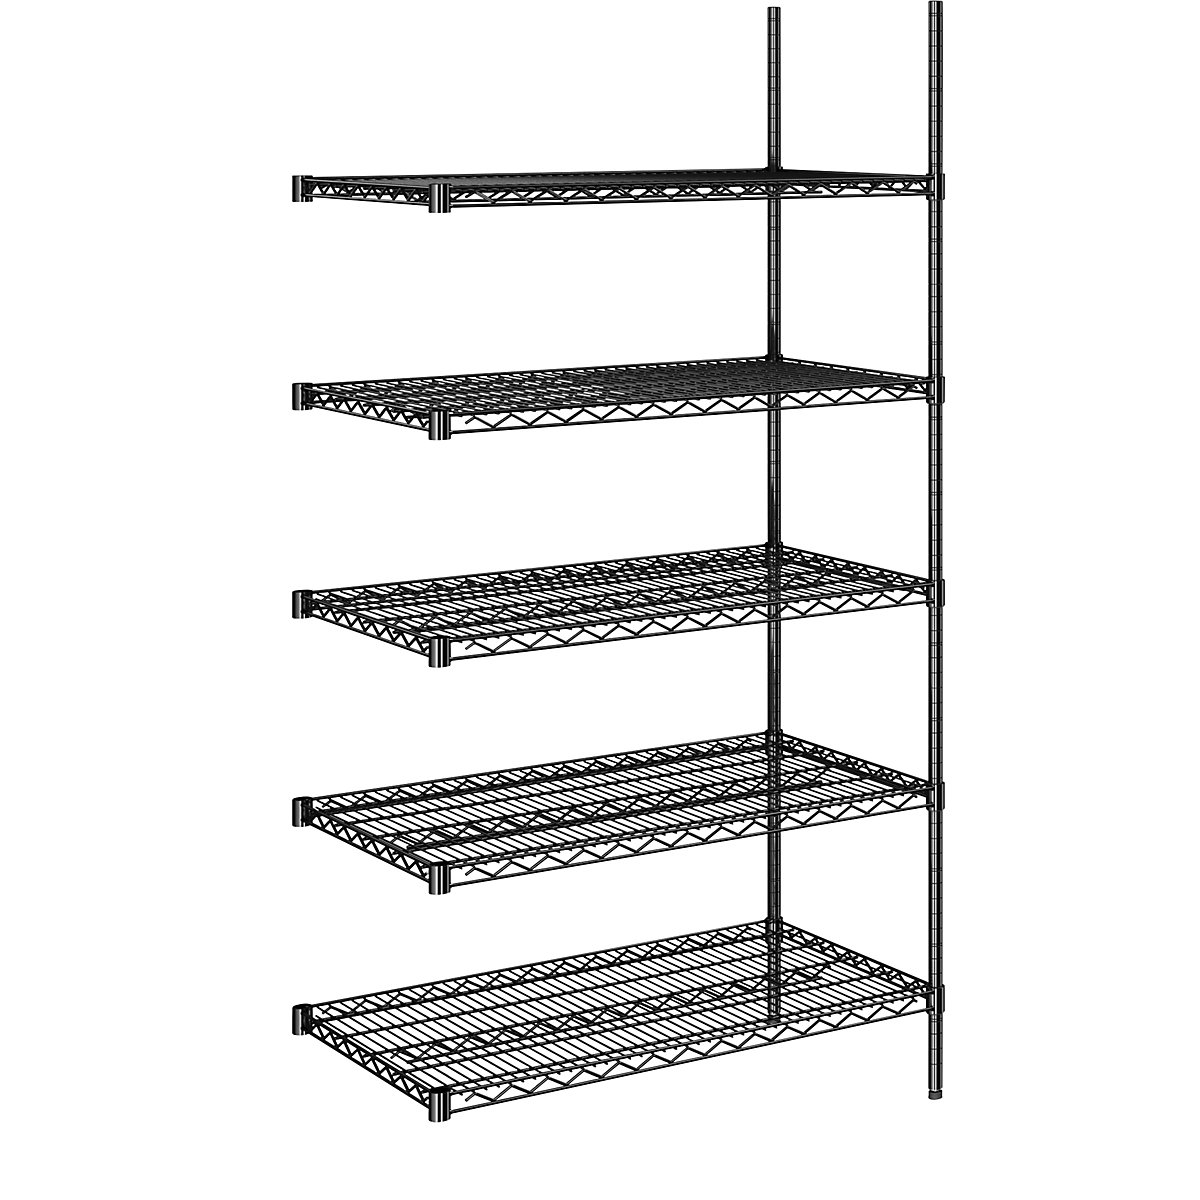 Steel wire mesh shelf unit, black, max. shelf load 250 kg, WxD 910 x 610 mm, extension shelf unit, height 1880 mm, 5 shelves-10